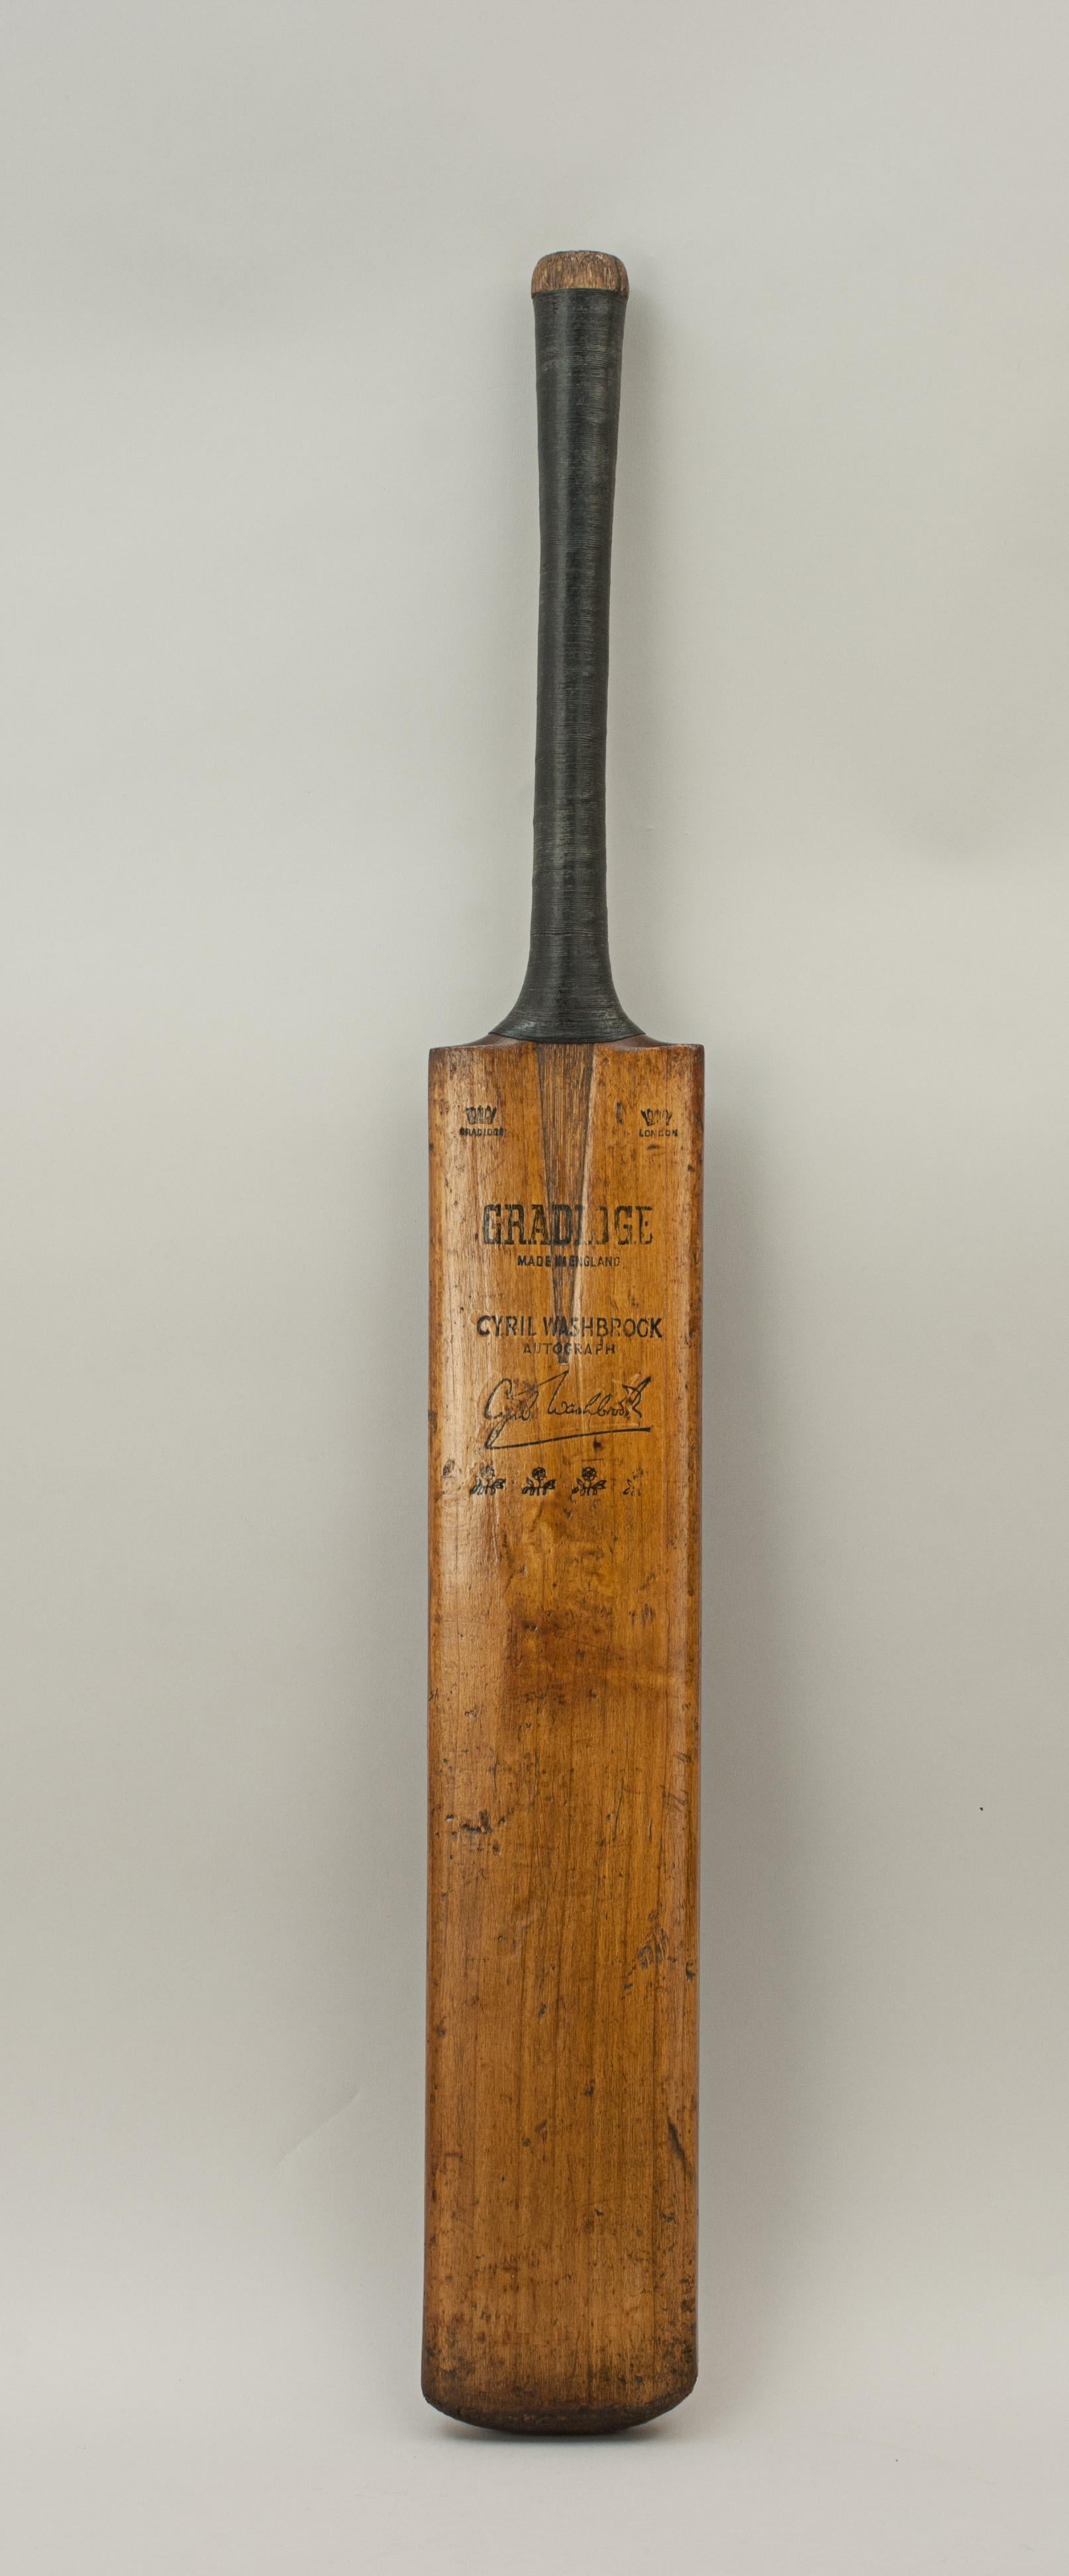 Vintage Gradidge cricket bat, Cyril washbrook.
A good willow cricket bat by Gradidge of London. The 